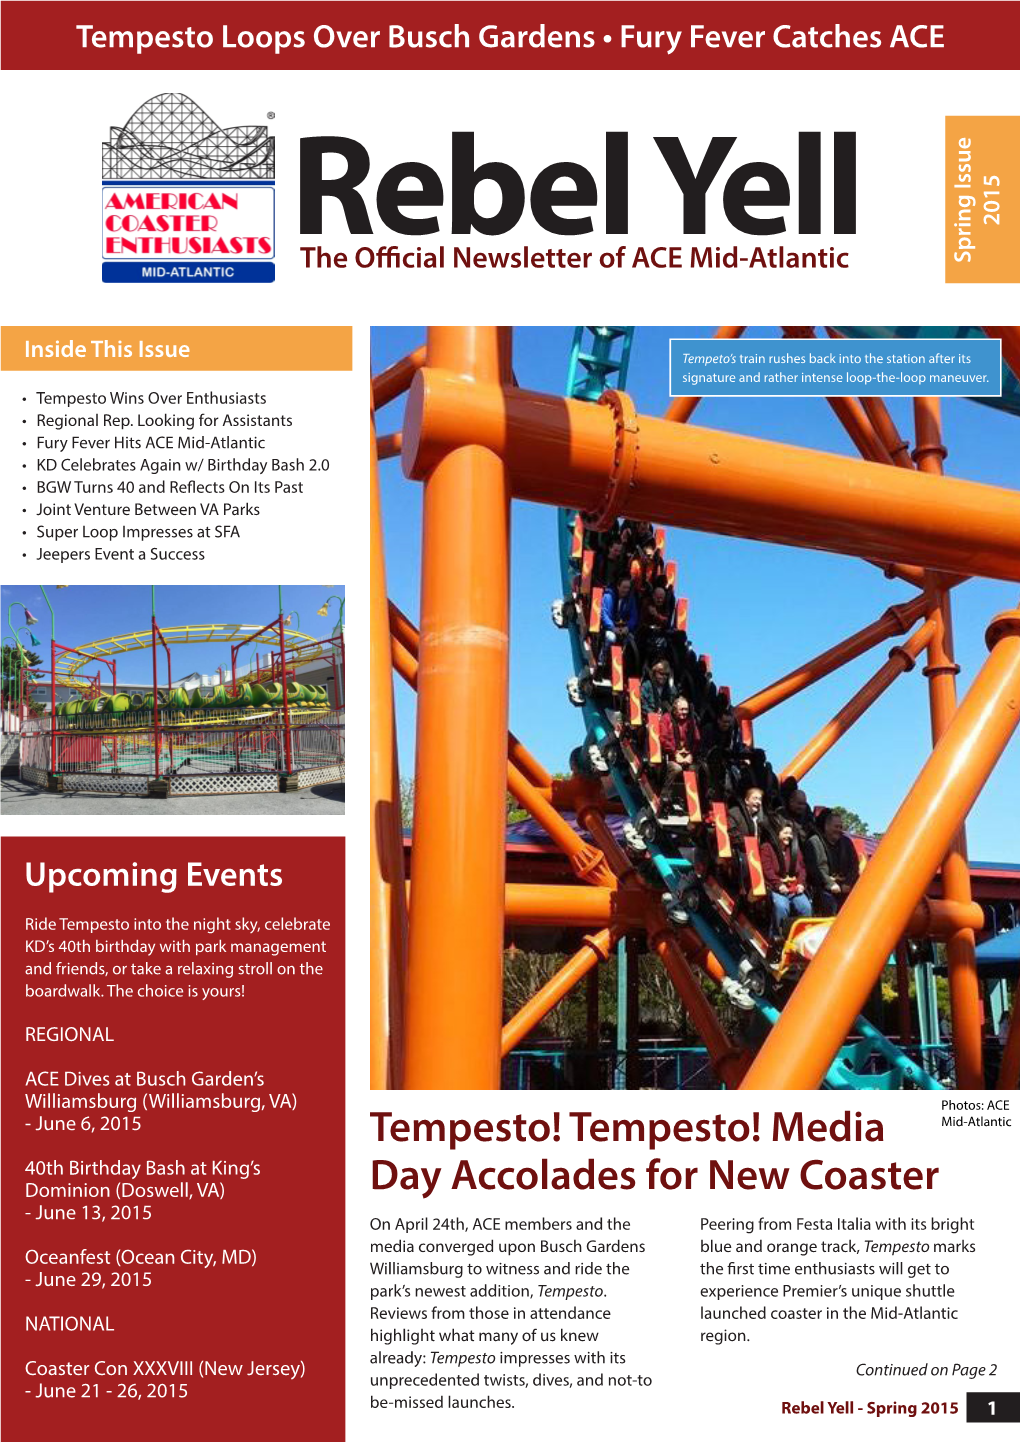 Tempesto! Media Day Accolades for New Coaster